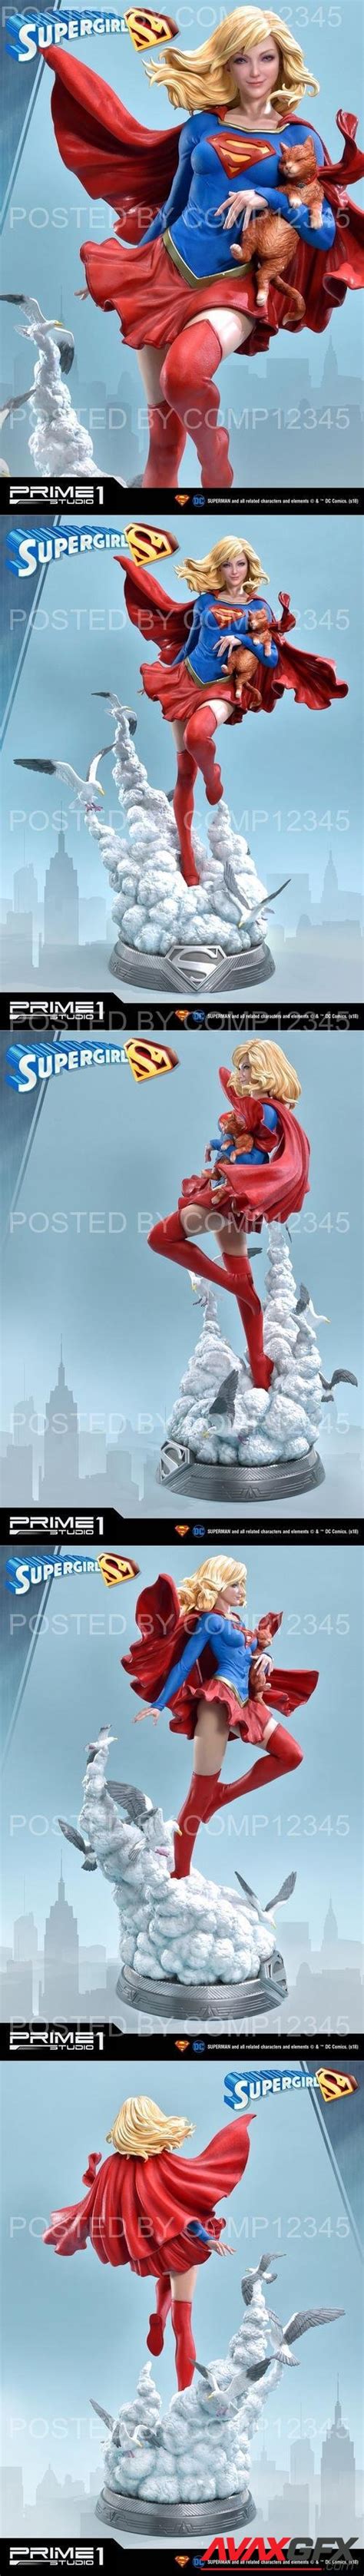 Prime 1 Studio Supergirl Statue 3d Print Avaxgfx